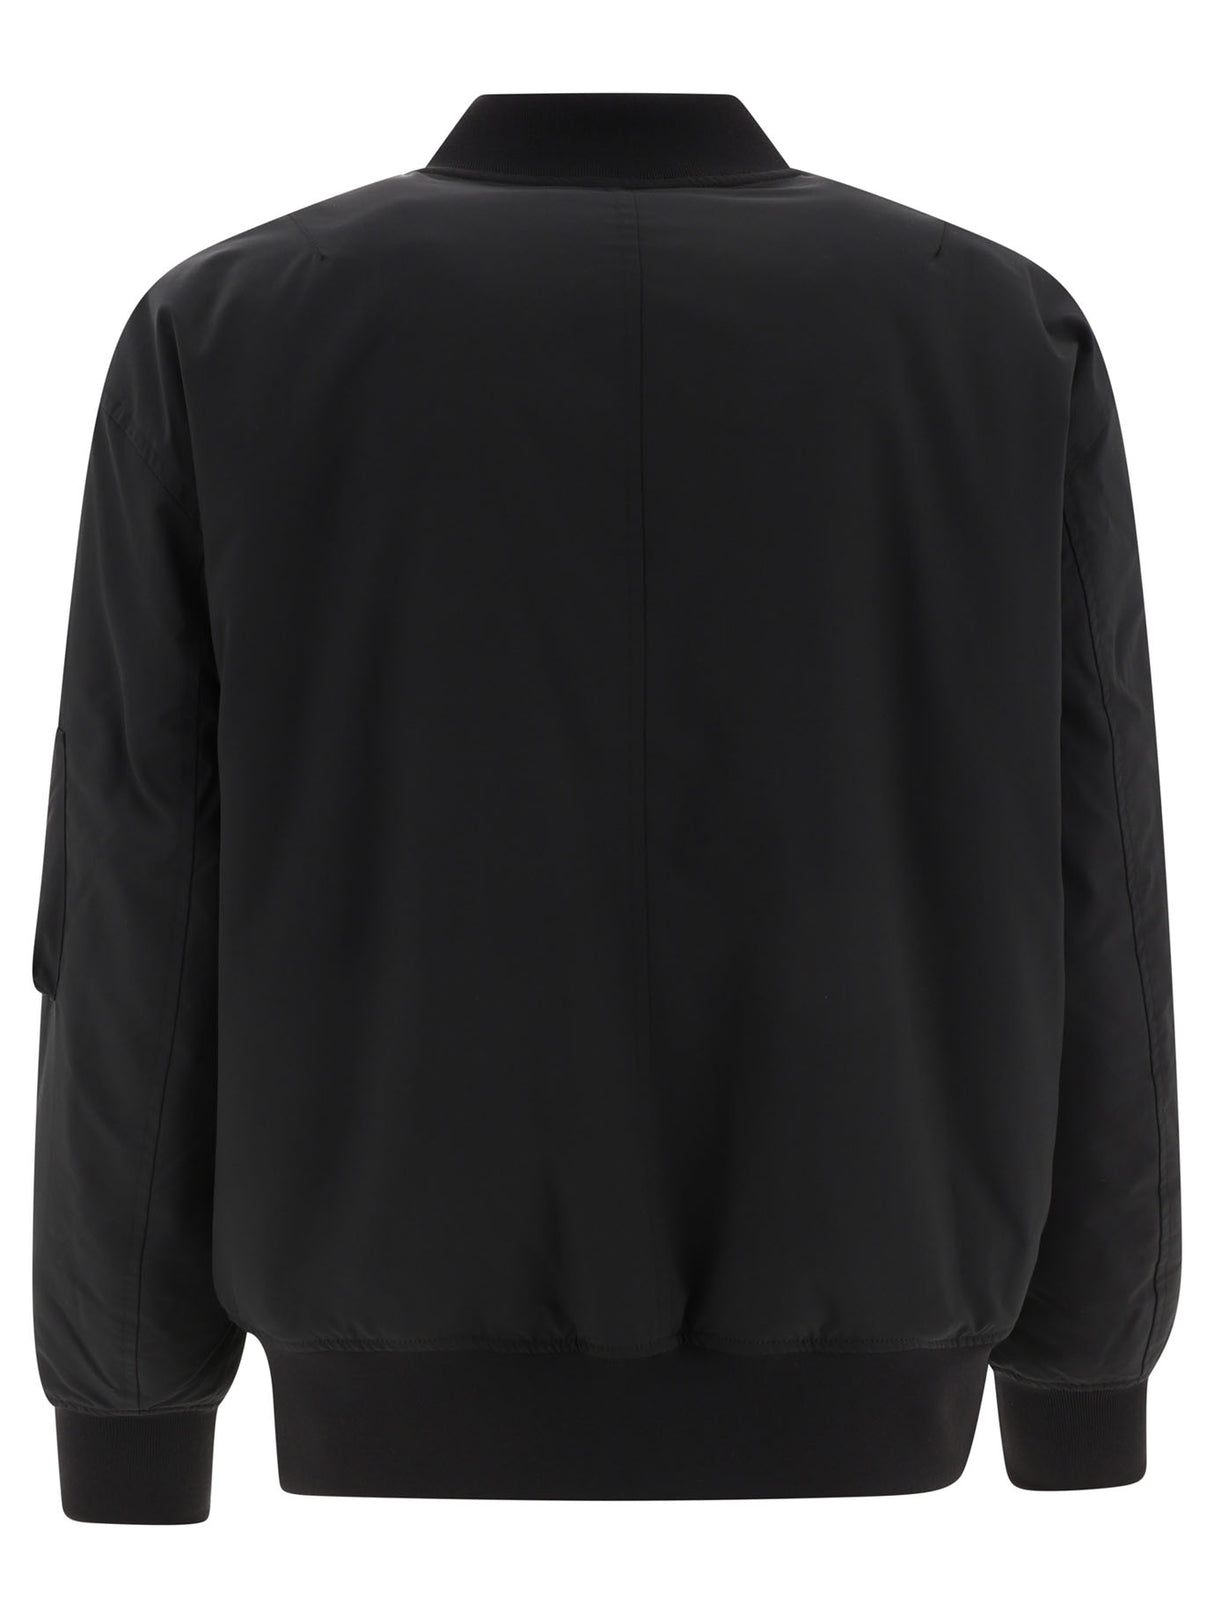 A.P.C. Sleek Black Bomber Jacket for Men - Seasonal Essential for FW24